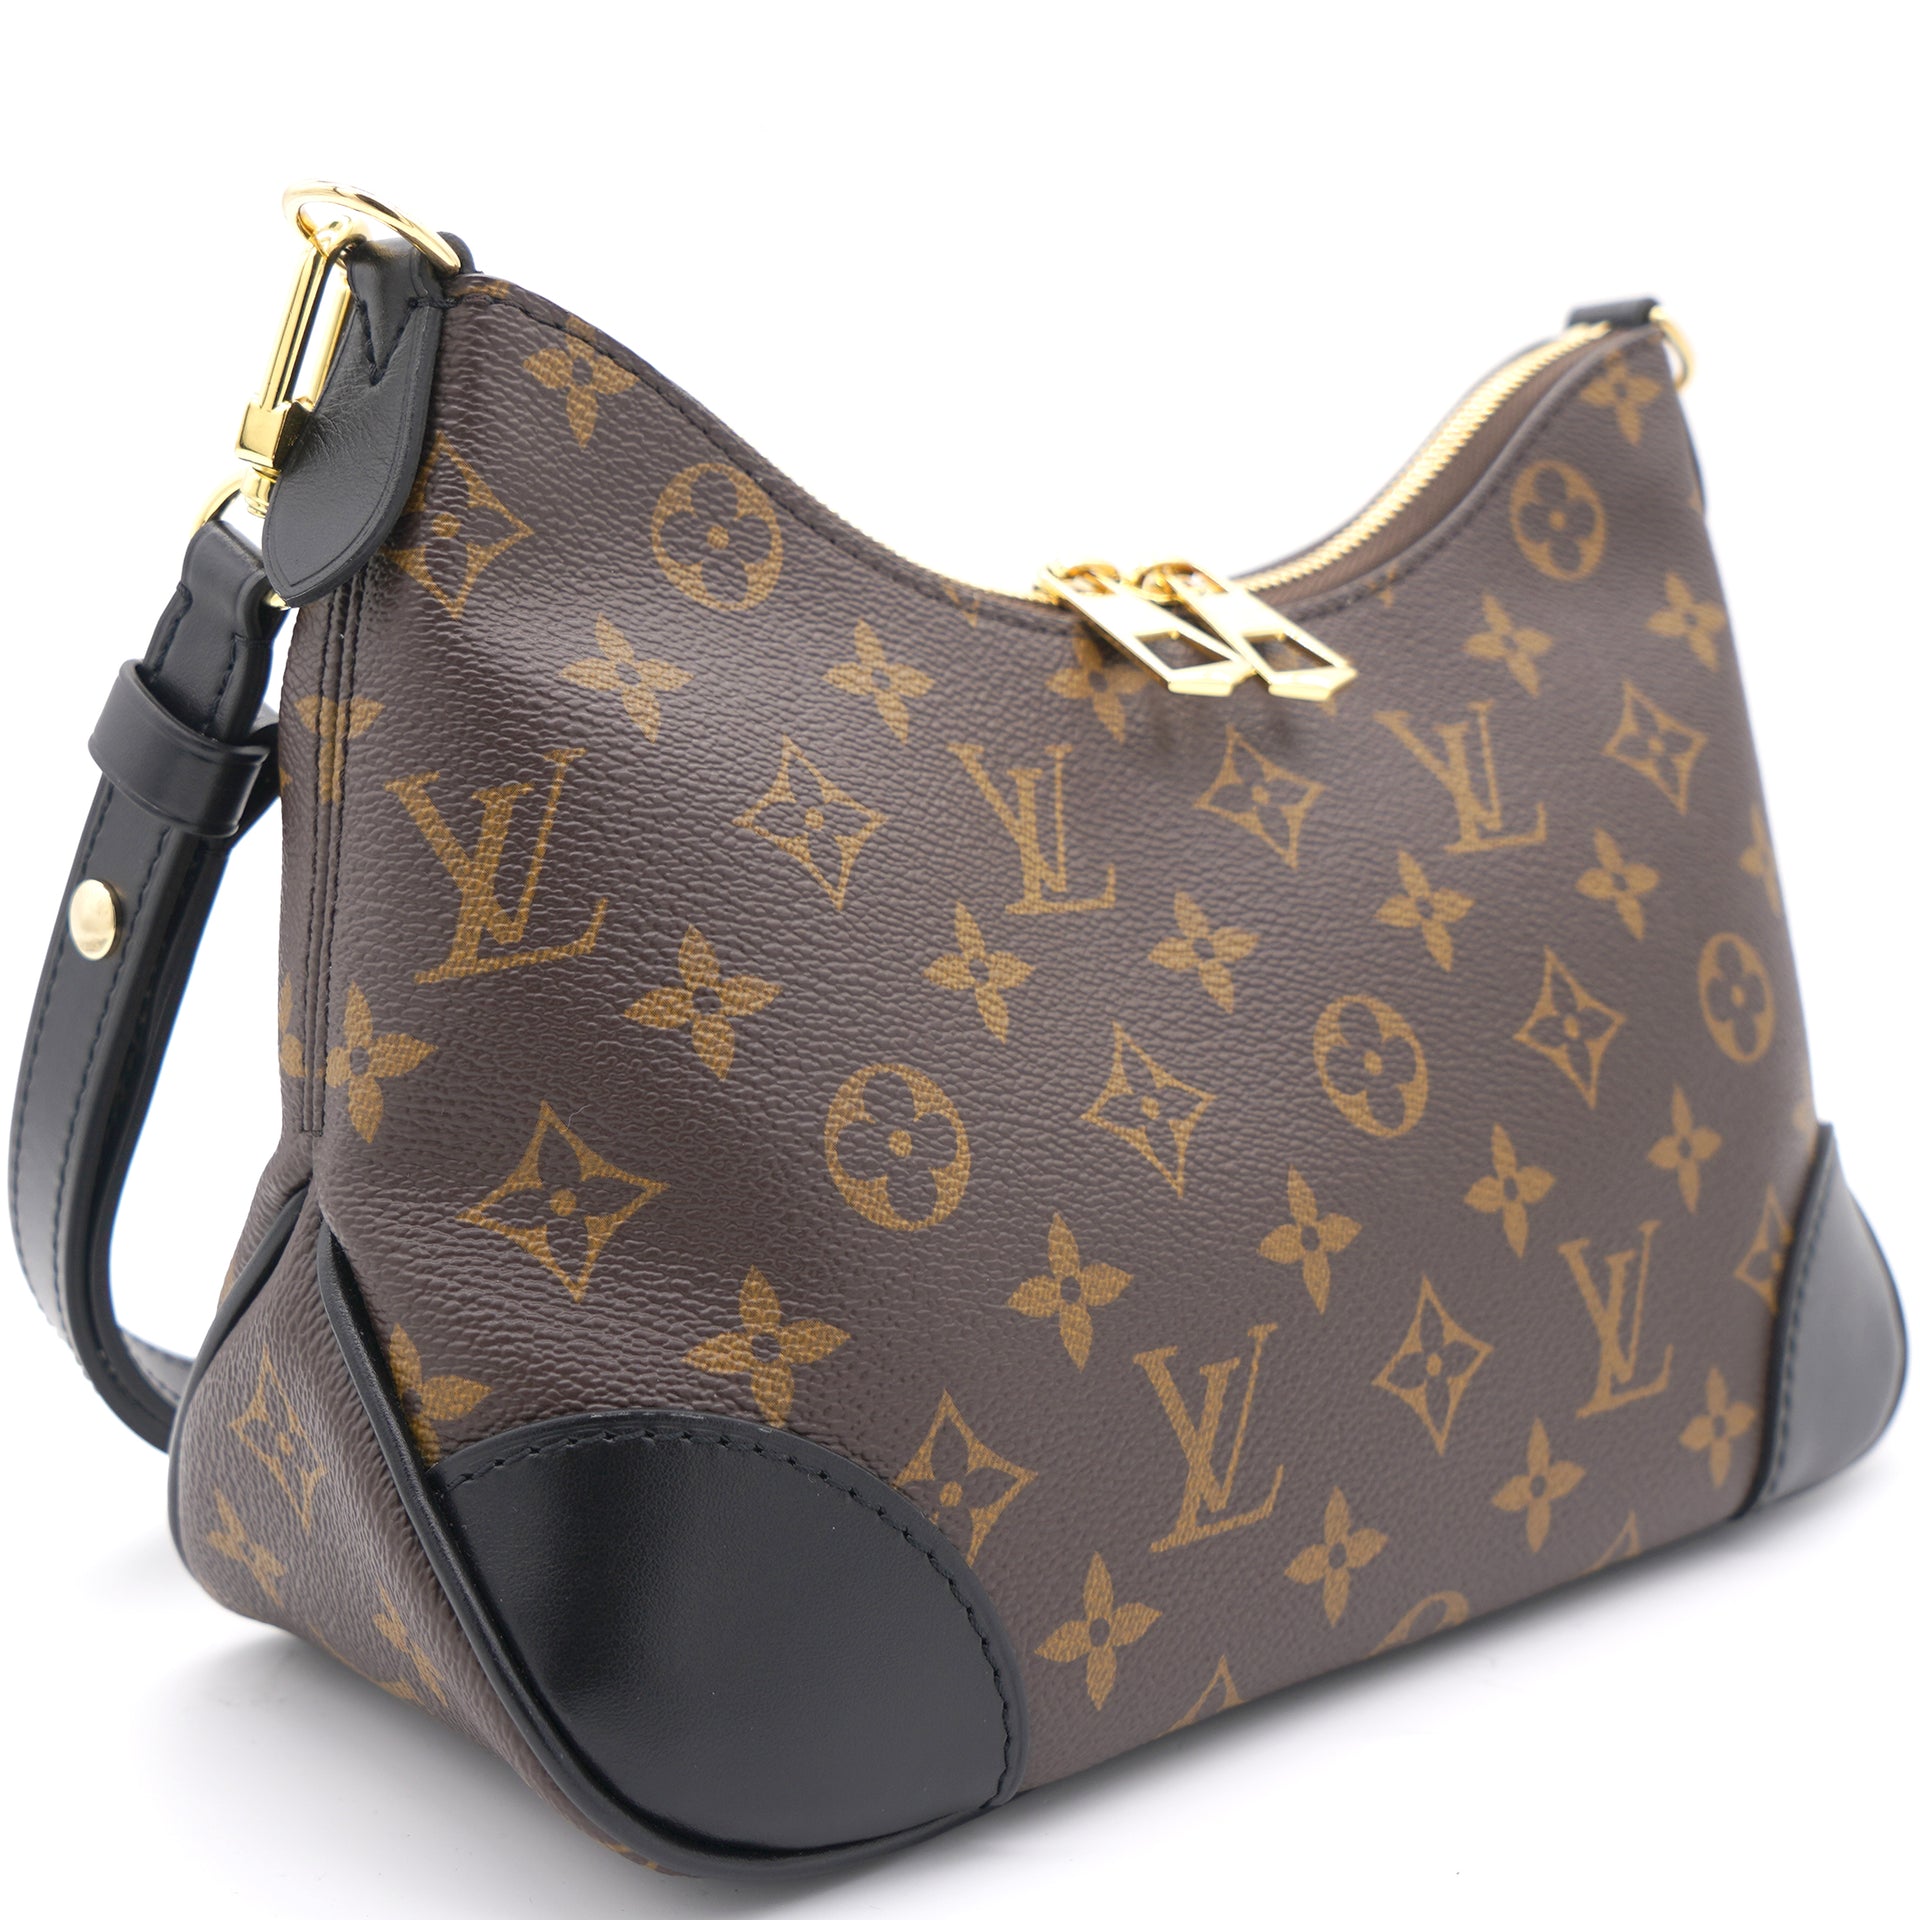 Boulogne Bag Luxury Handbag - Brown - Monogram Canvas - Women